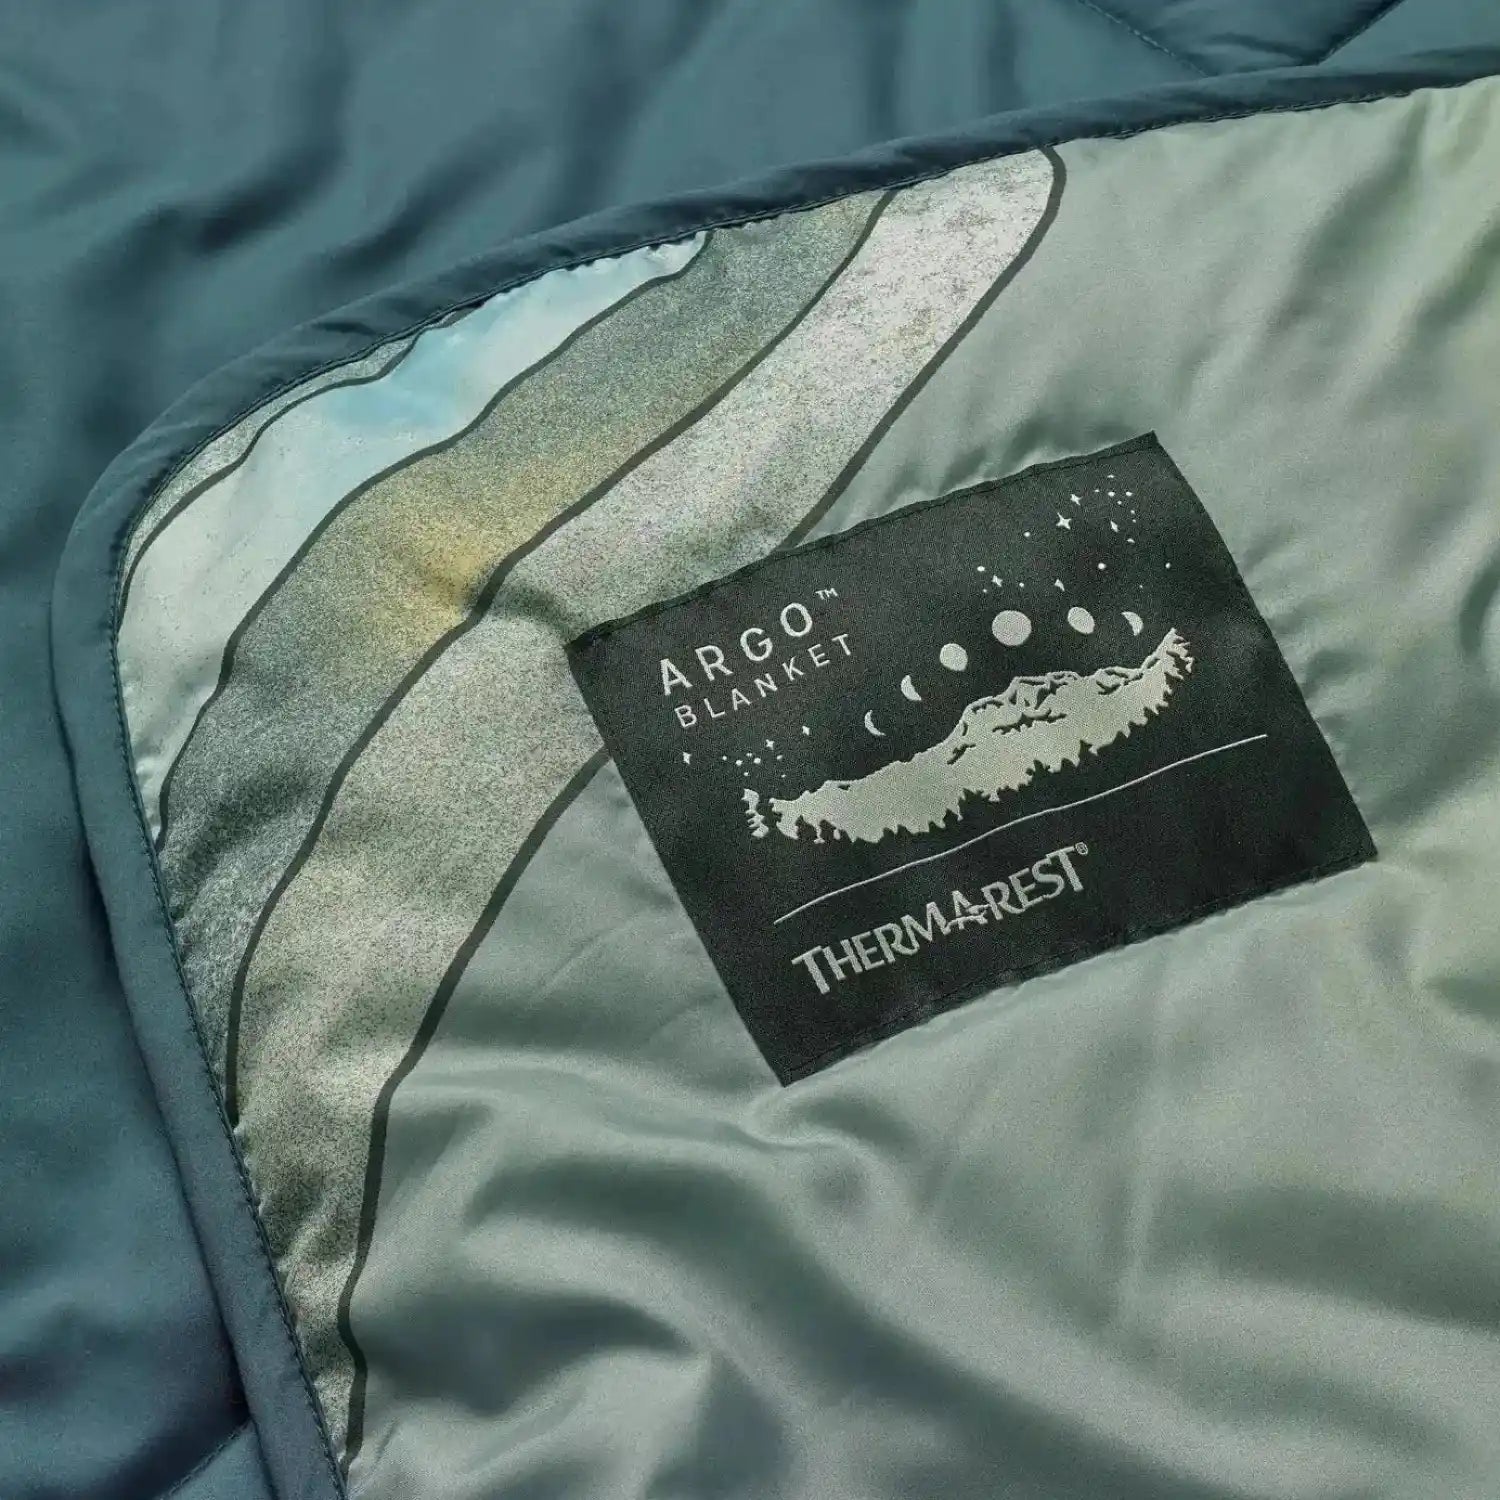 Argo™ Blanket